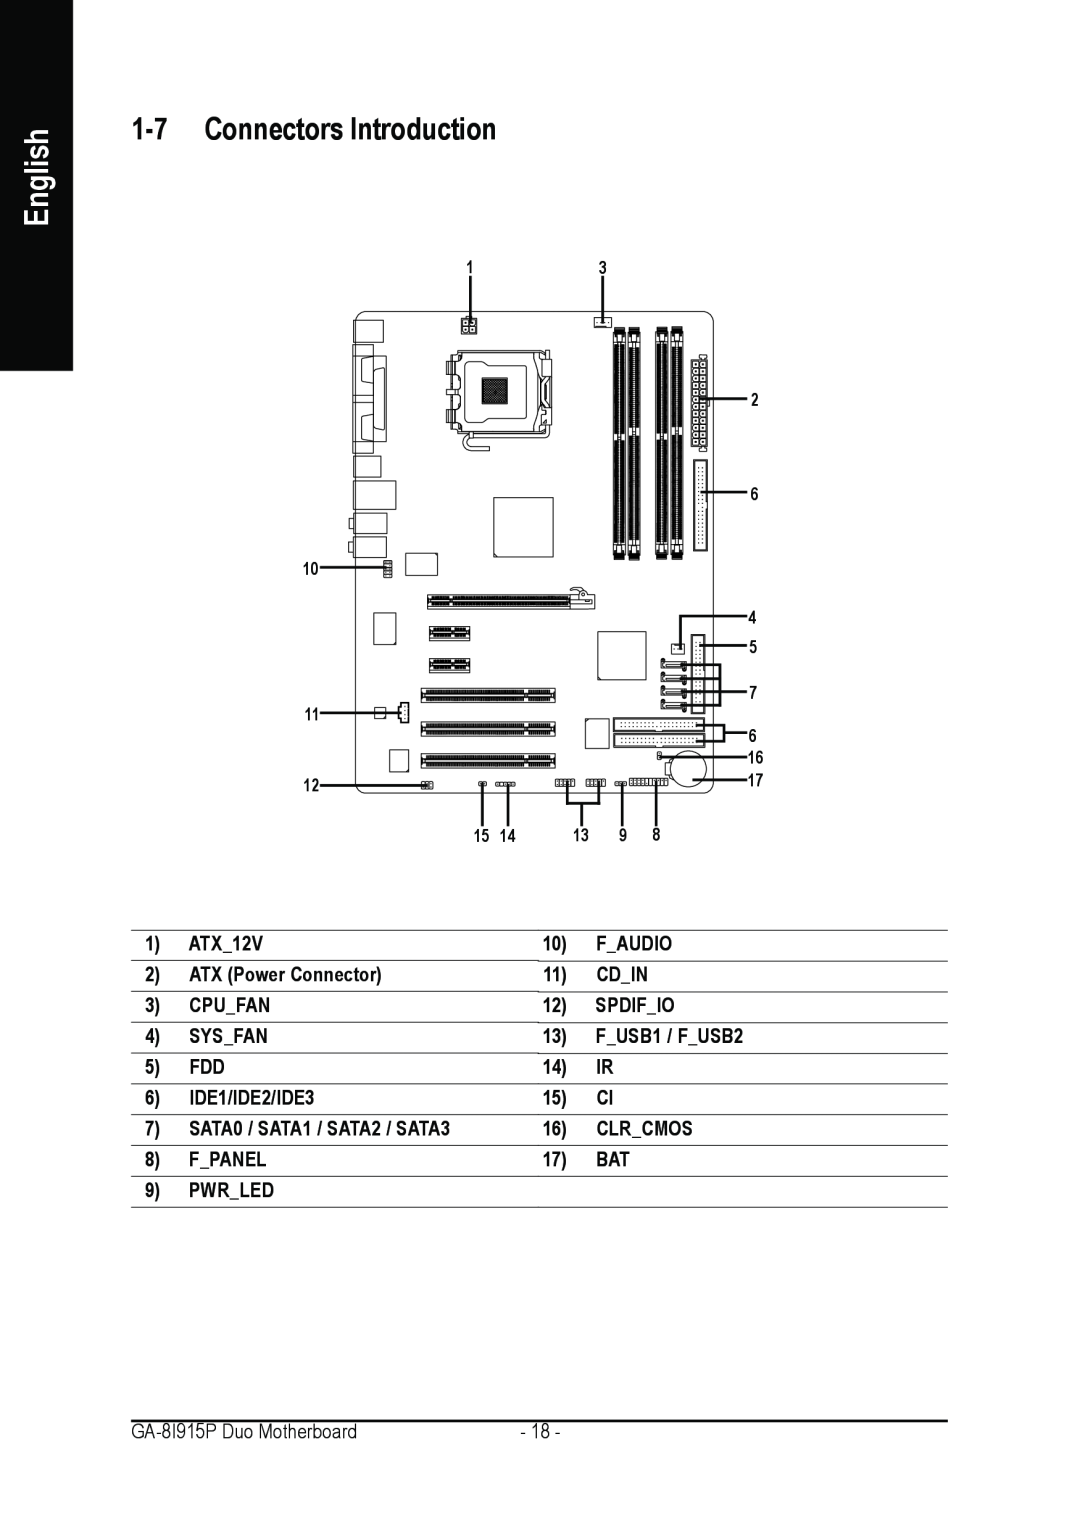 Gigabyte GA-8I915P DUO user manual Connectors Introduction, English 